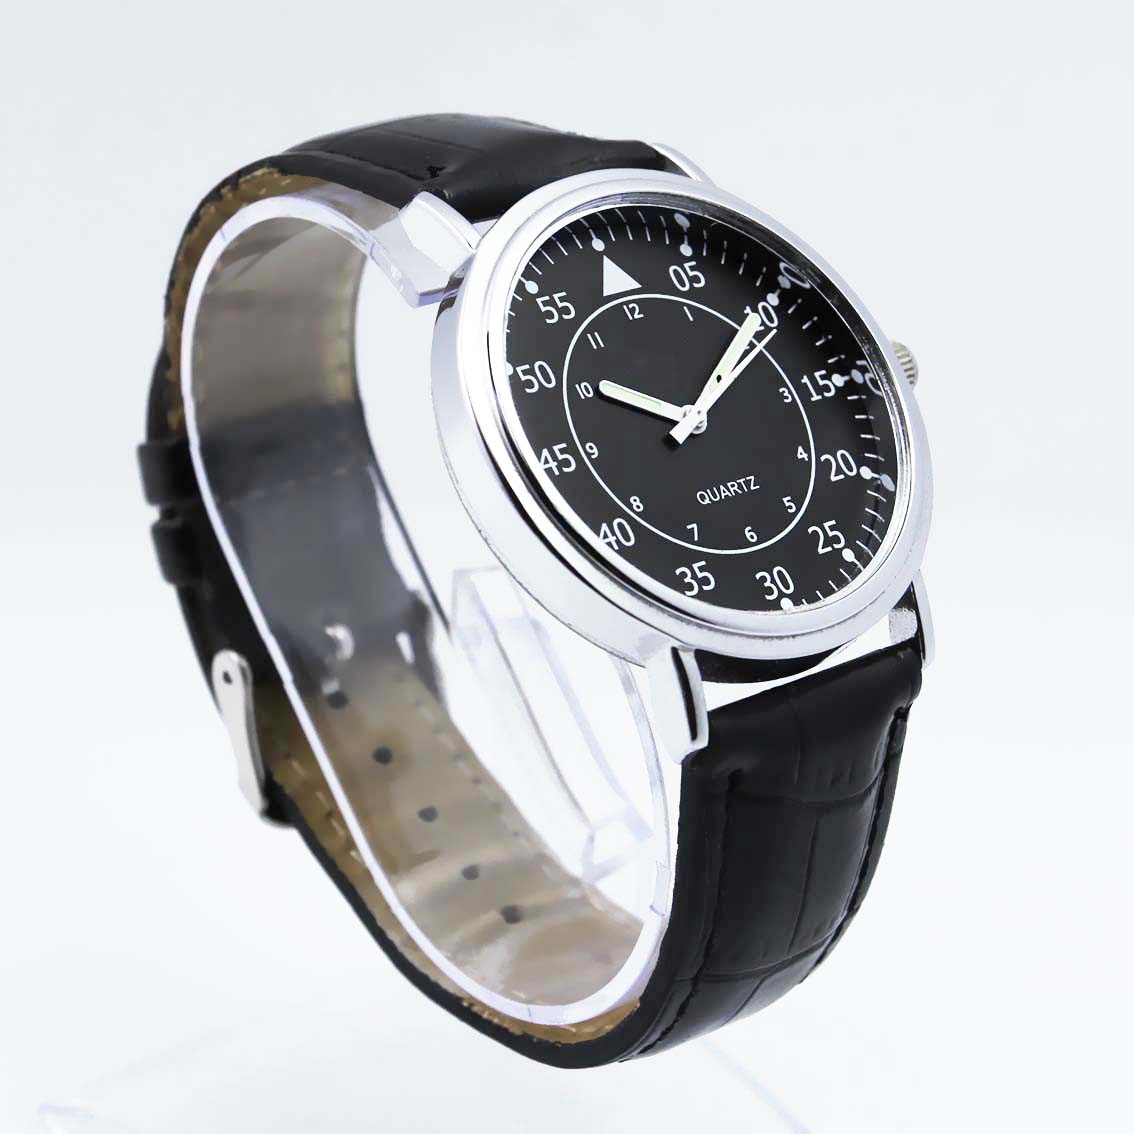 #02067Men's wristwatch quartz analog leather strap watch